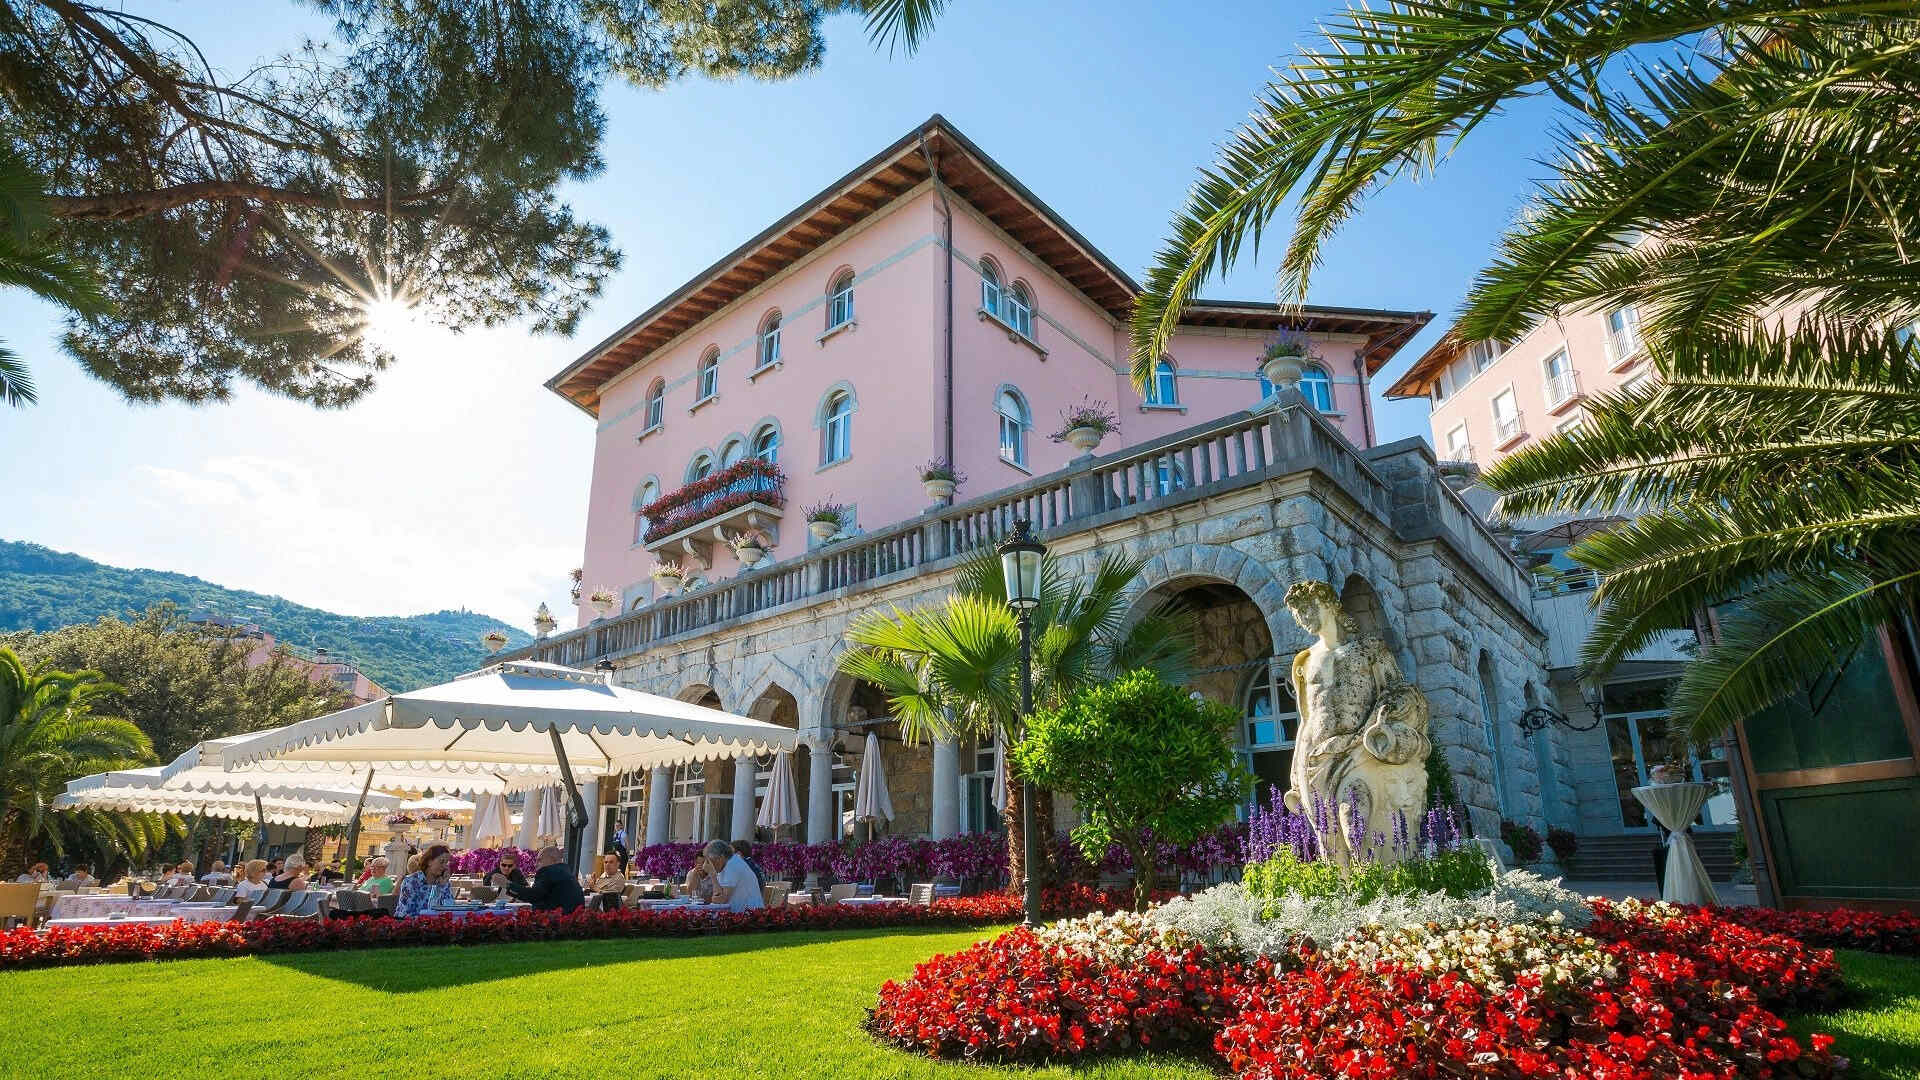 Amadria Park Hotel Milenij - 5-Star Luxury Hotel in Opatija, Croatia